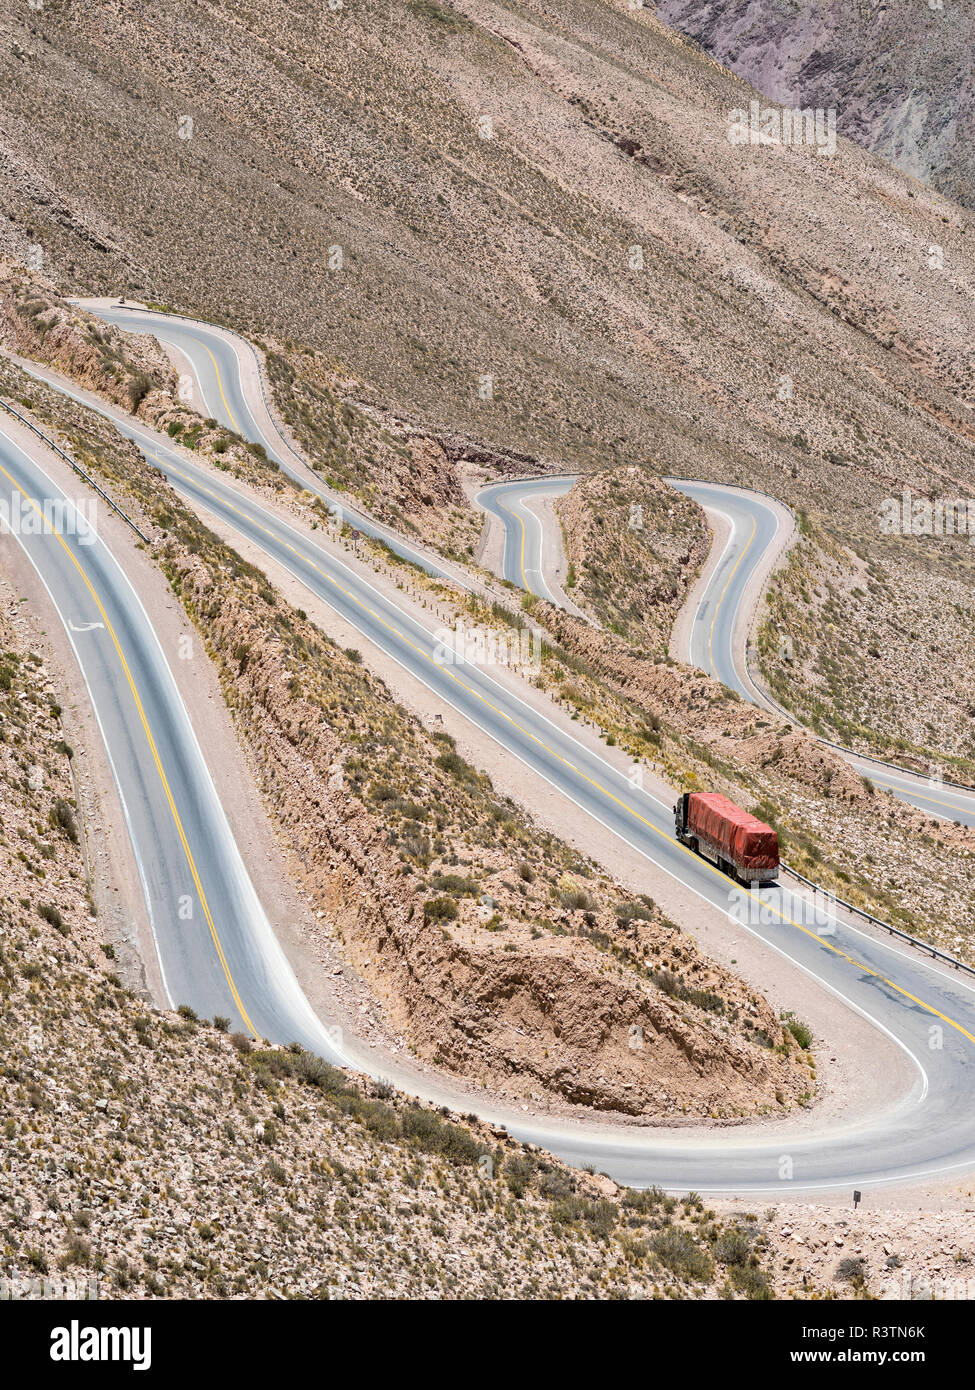 National Road RN 52, the mountain road Cuesta del Lipan climbing up to Abra de Potrerillos. South America, Argentina (Editorial Use Only) Stock Photo